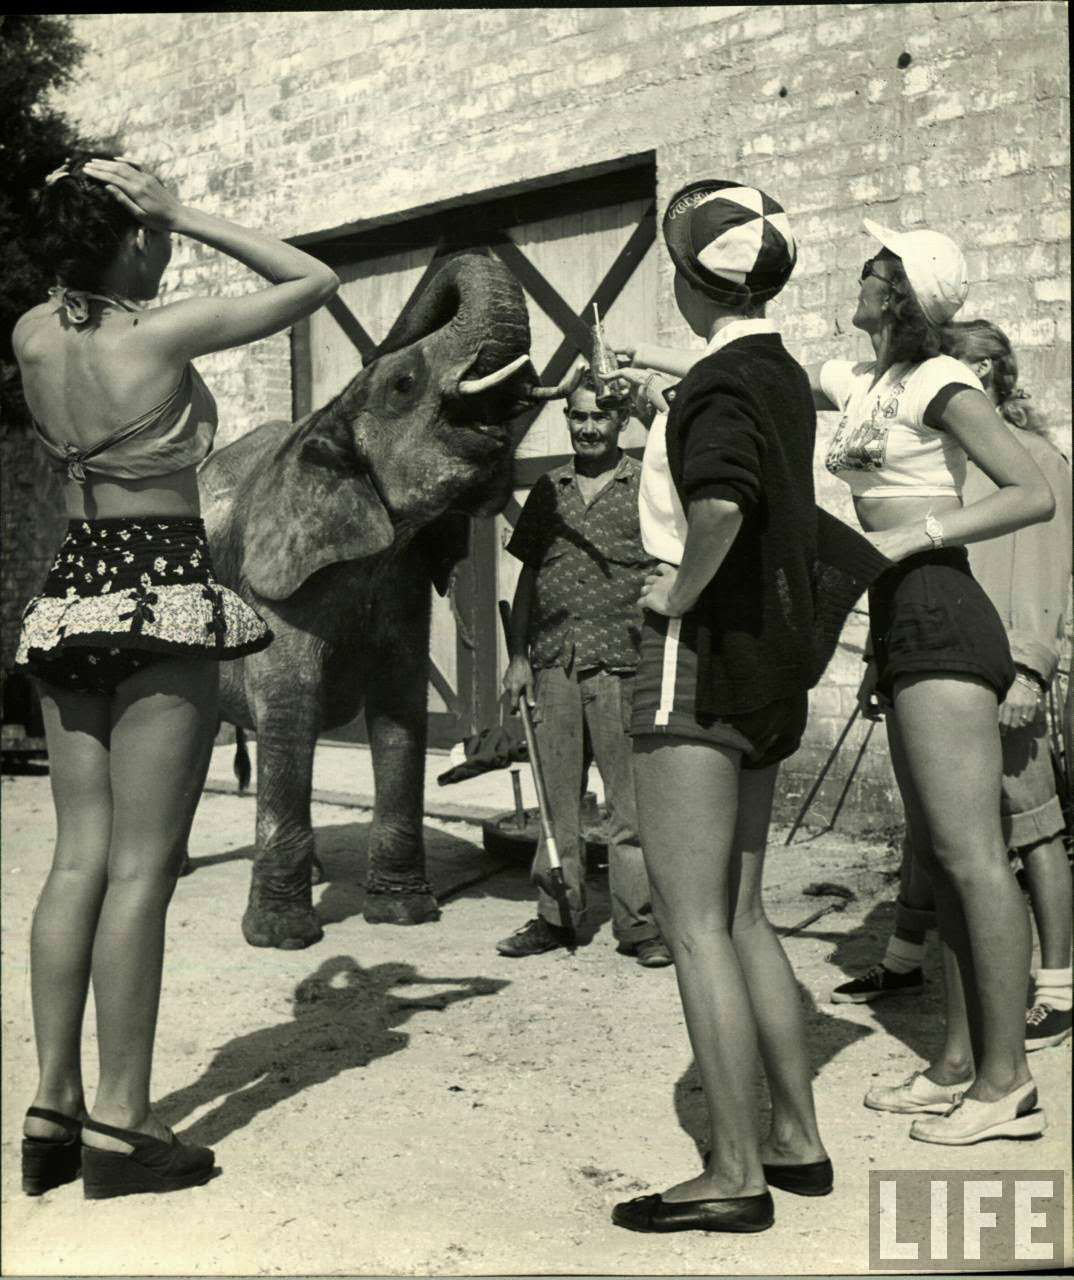 Circus Girls Of Sarasota: Vintage Photos Documenting Daily Life of Sassy Acrobat Performers, 1949